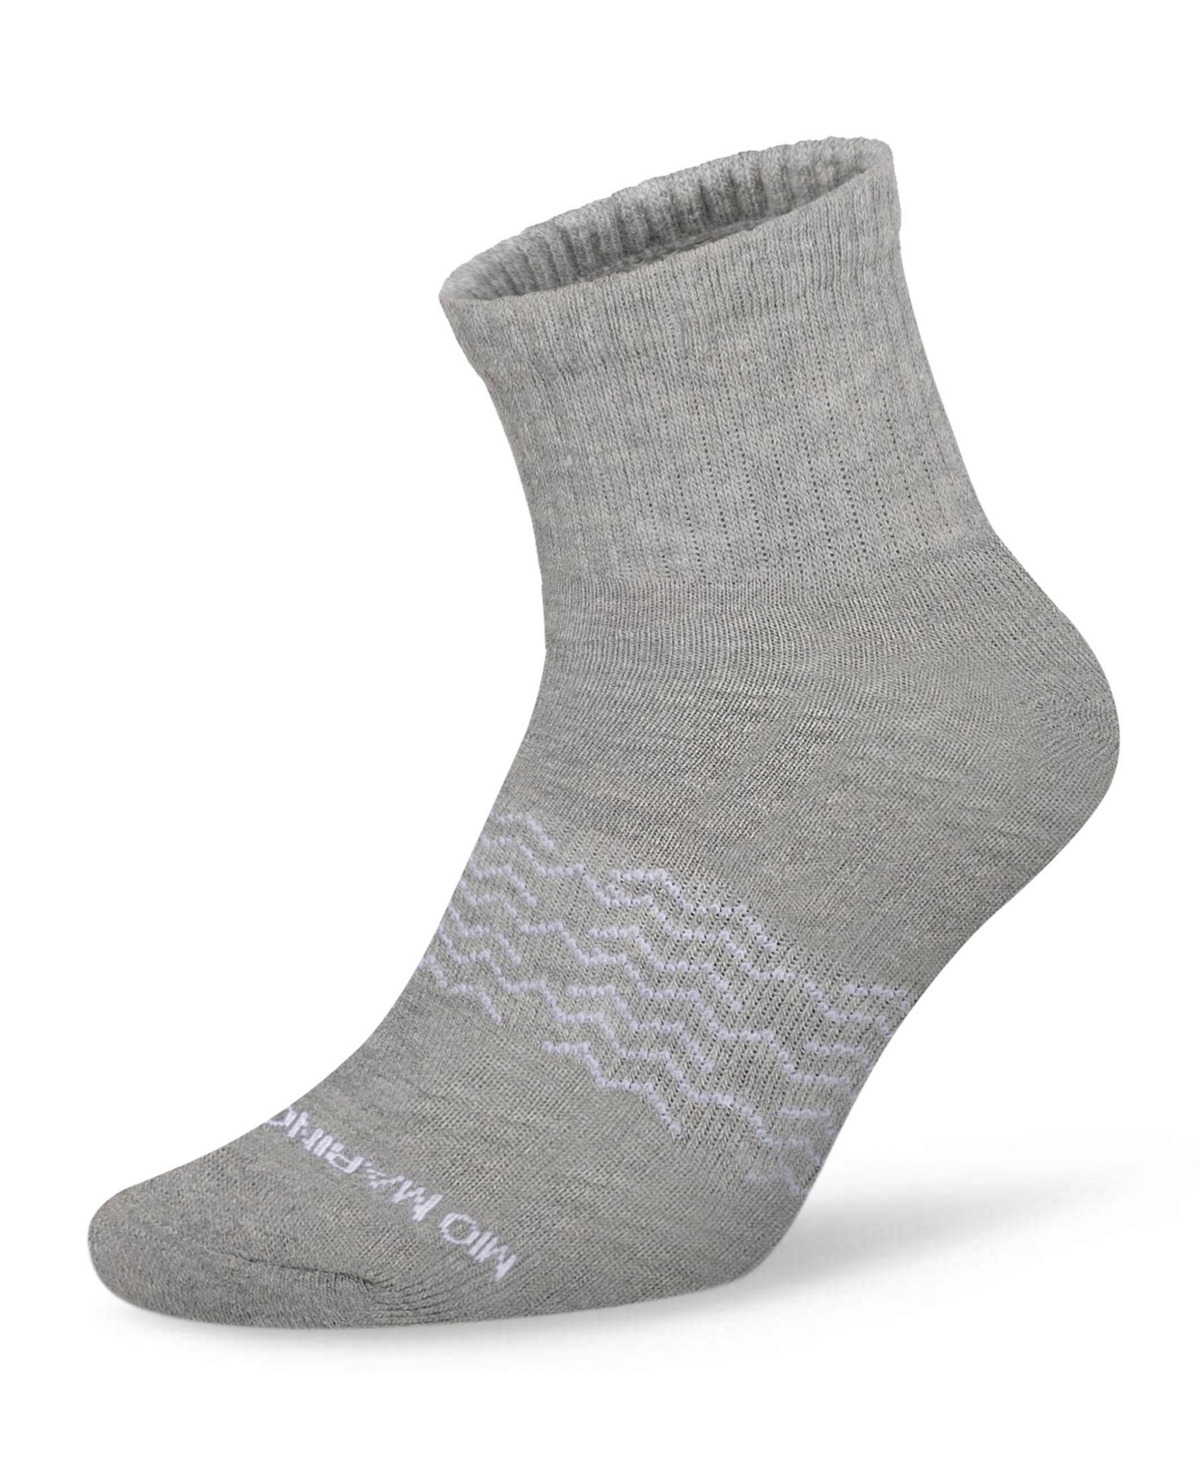 Men's Moisture Control Low Cut Ankle Socks 1 Pack - Gray - melange